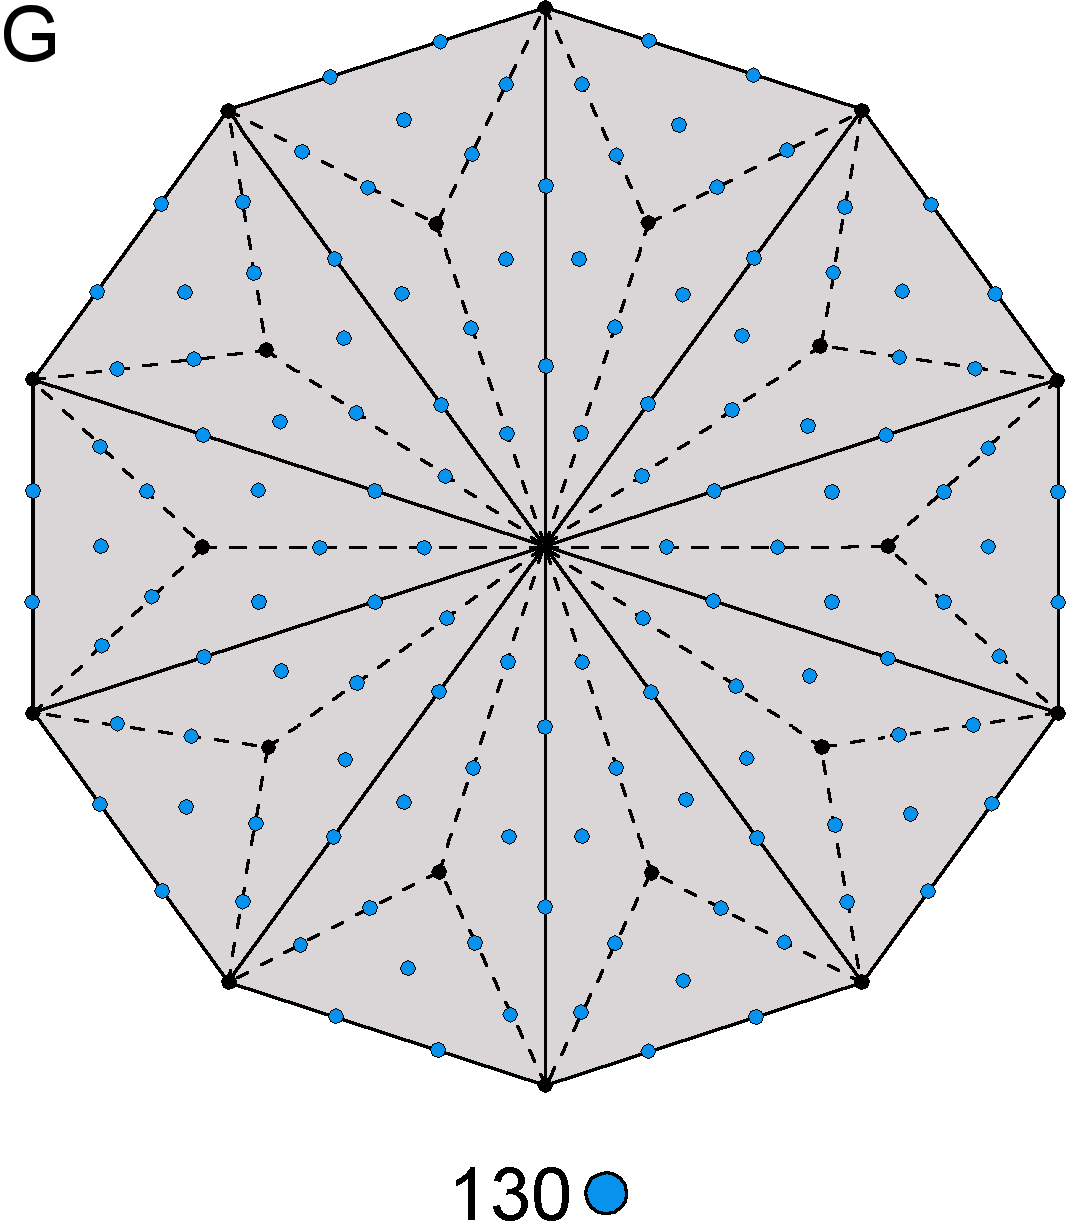 130 hexagonal yods in Type B decagon